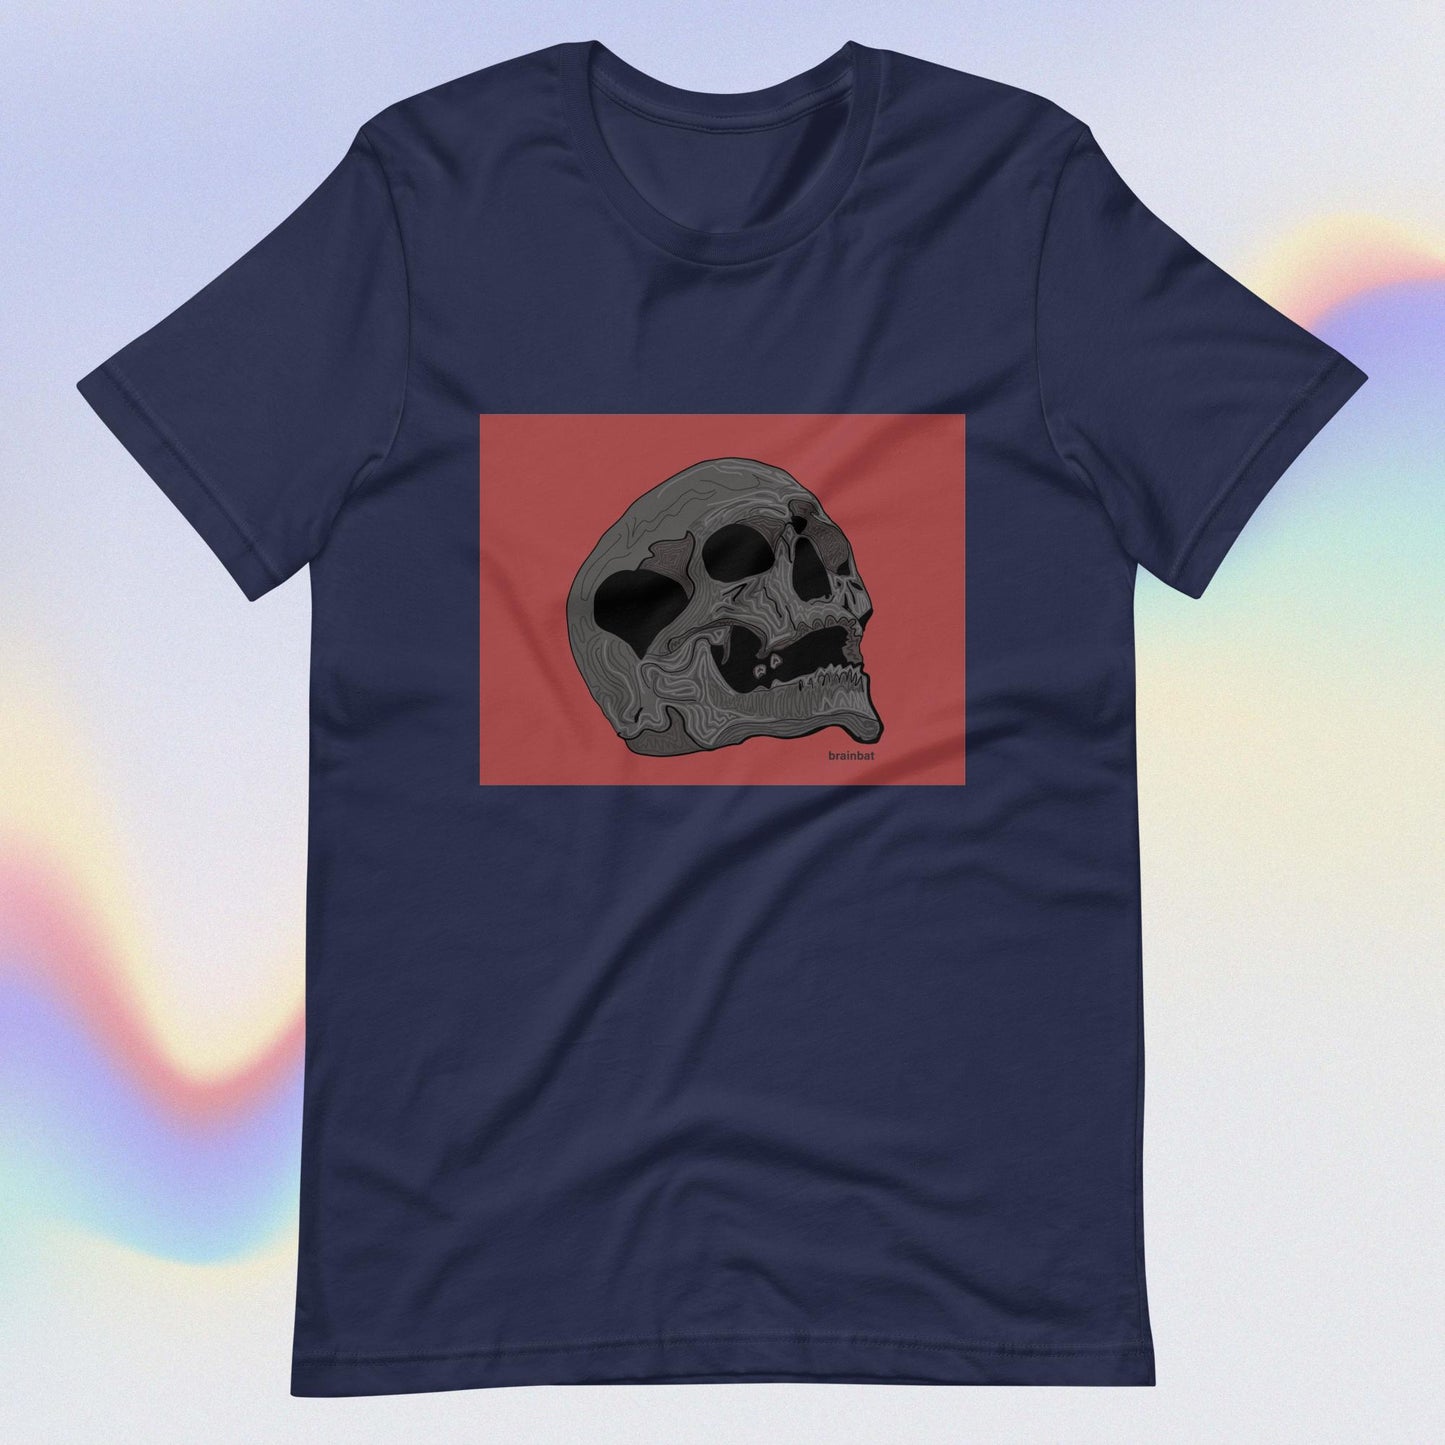 Skull T-shirt by Brainbat